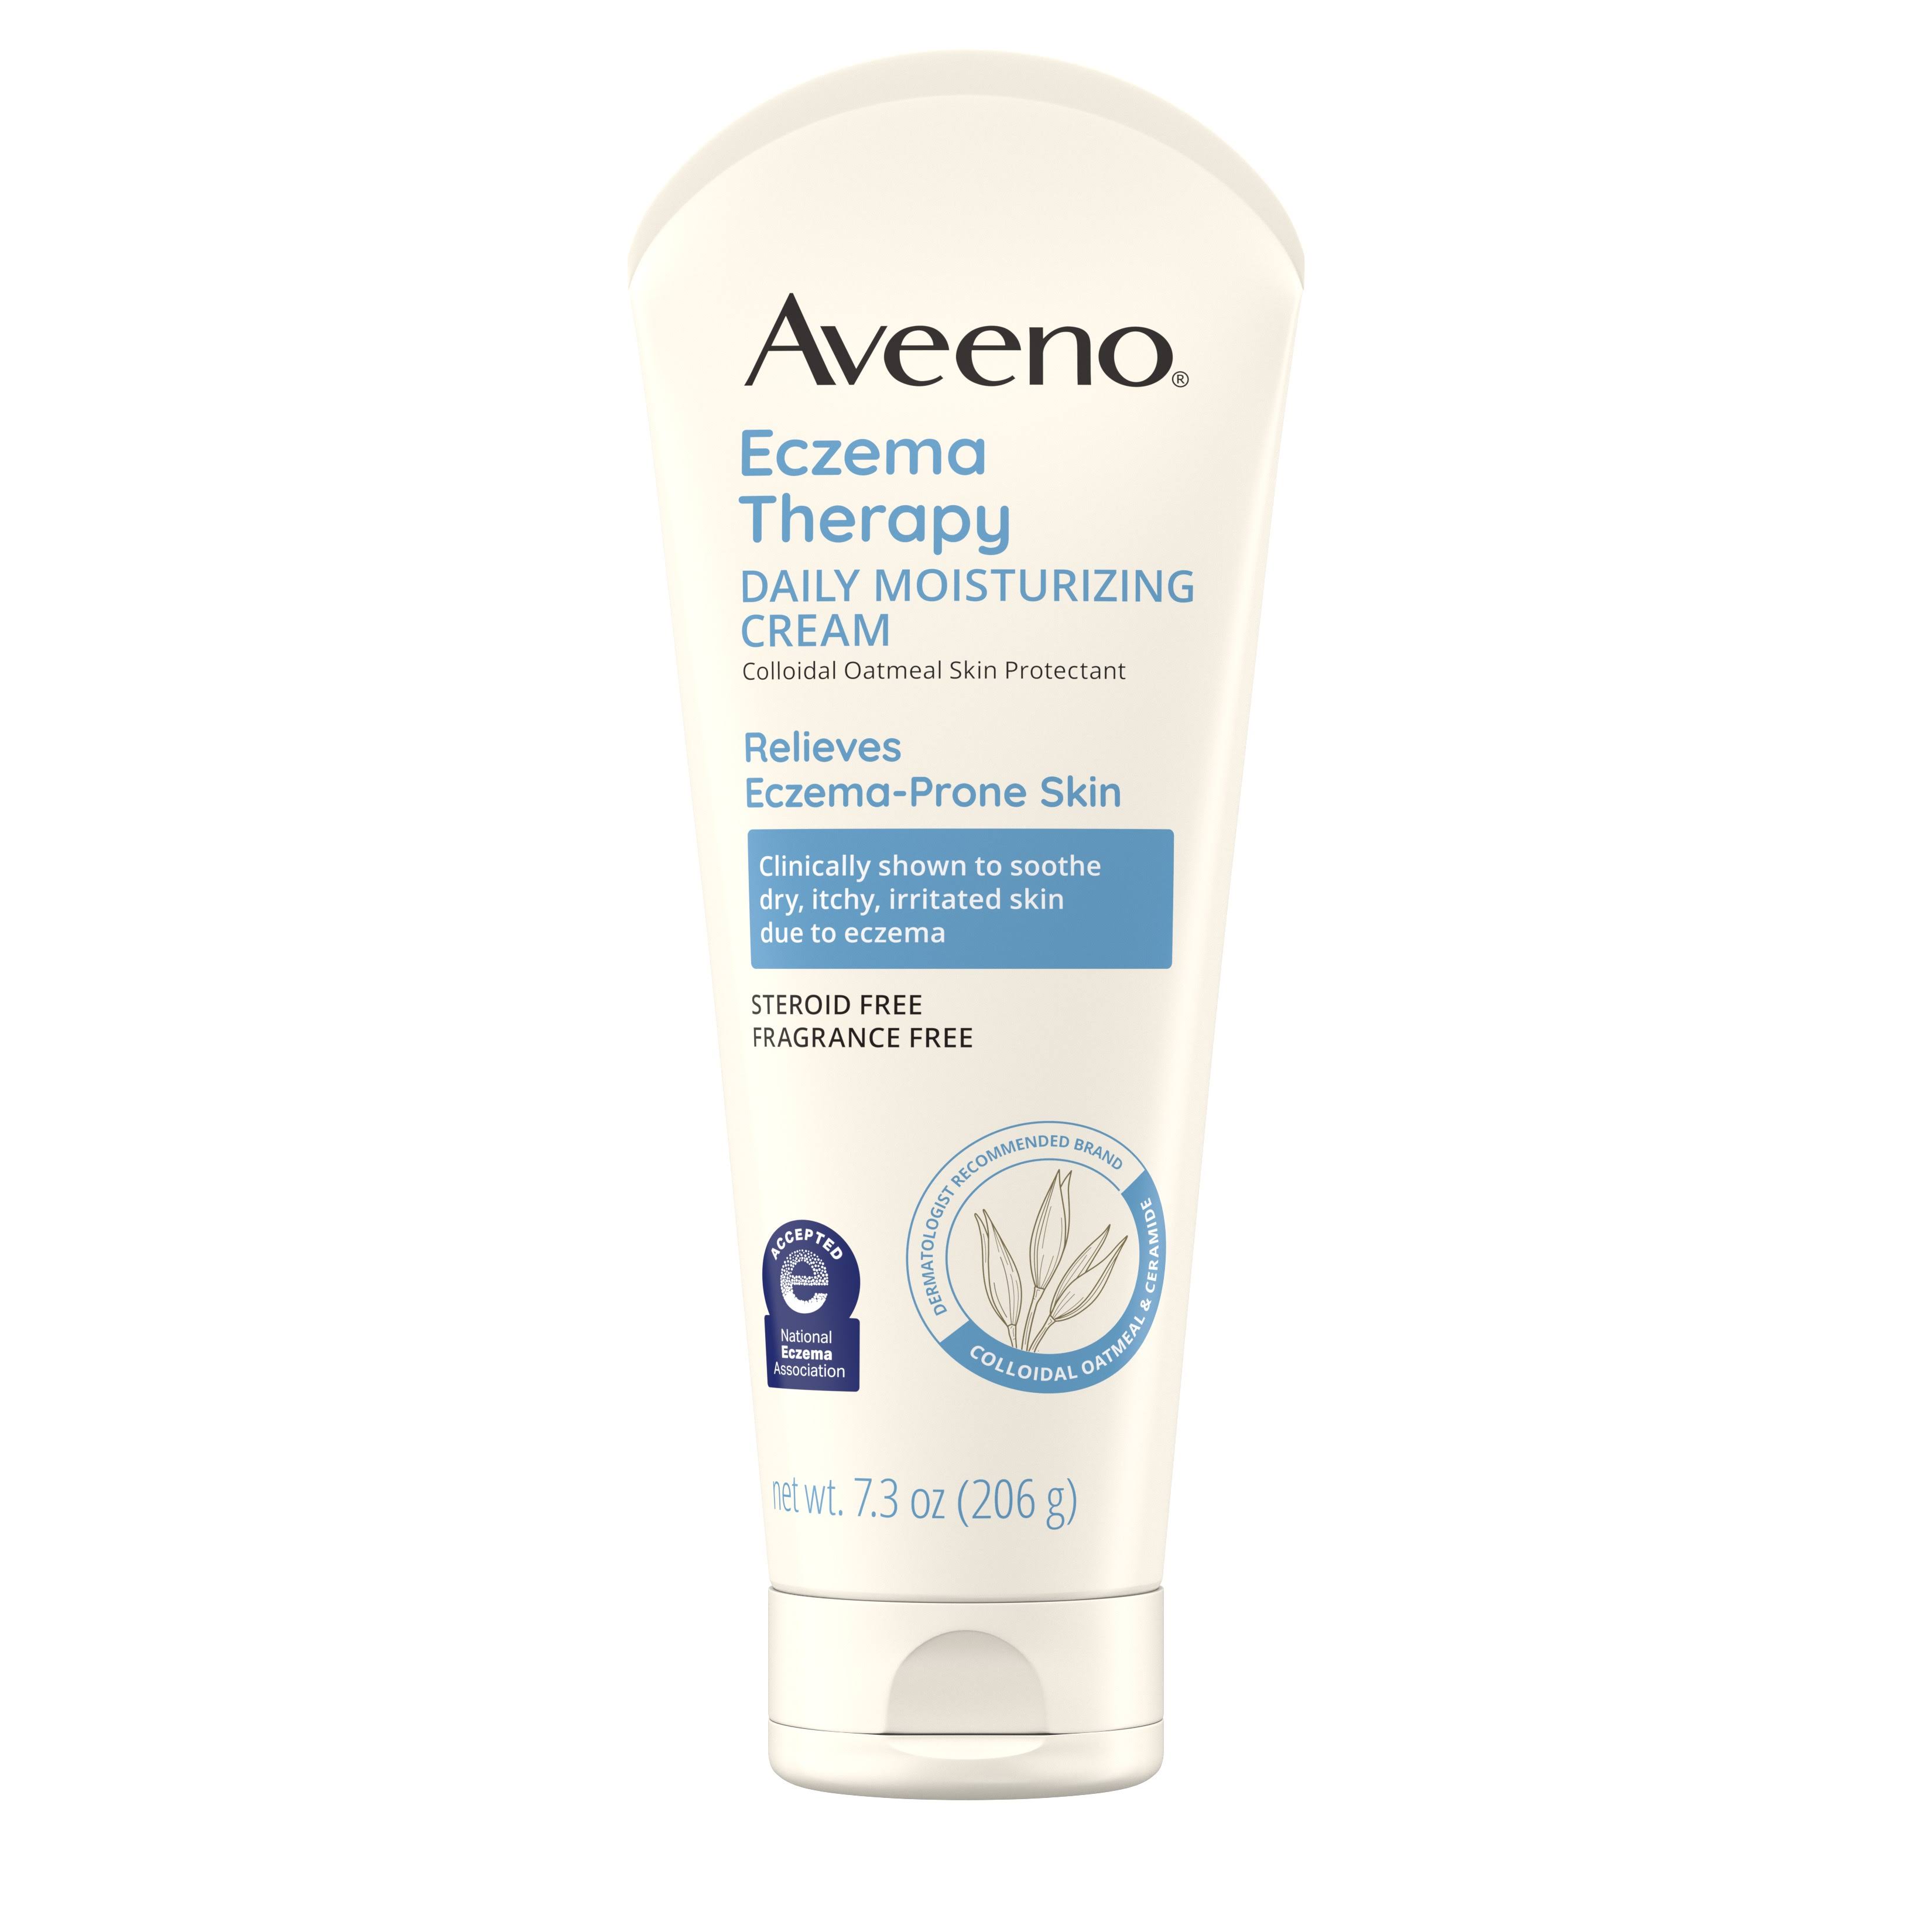 Aveeno Active Naturals Eczema Therapy Moisturizing Cream - 7.3oz